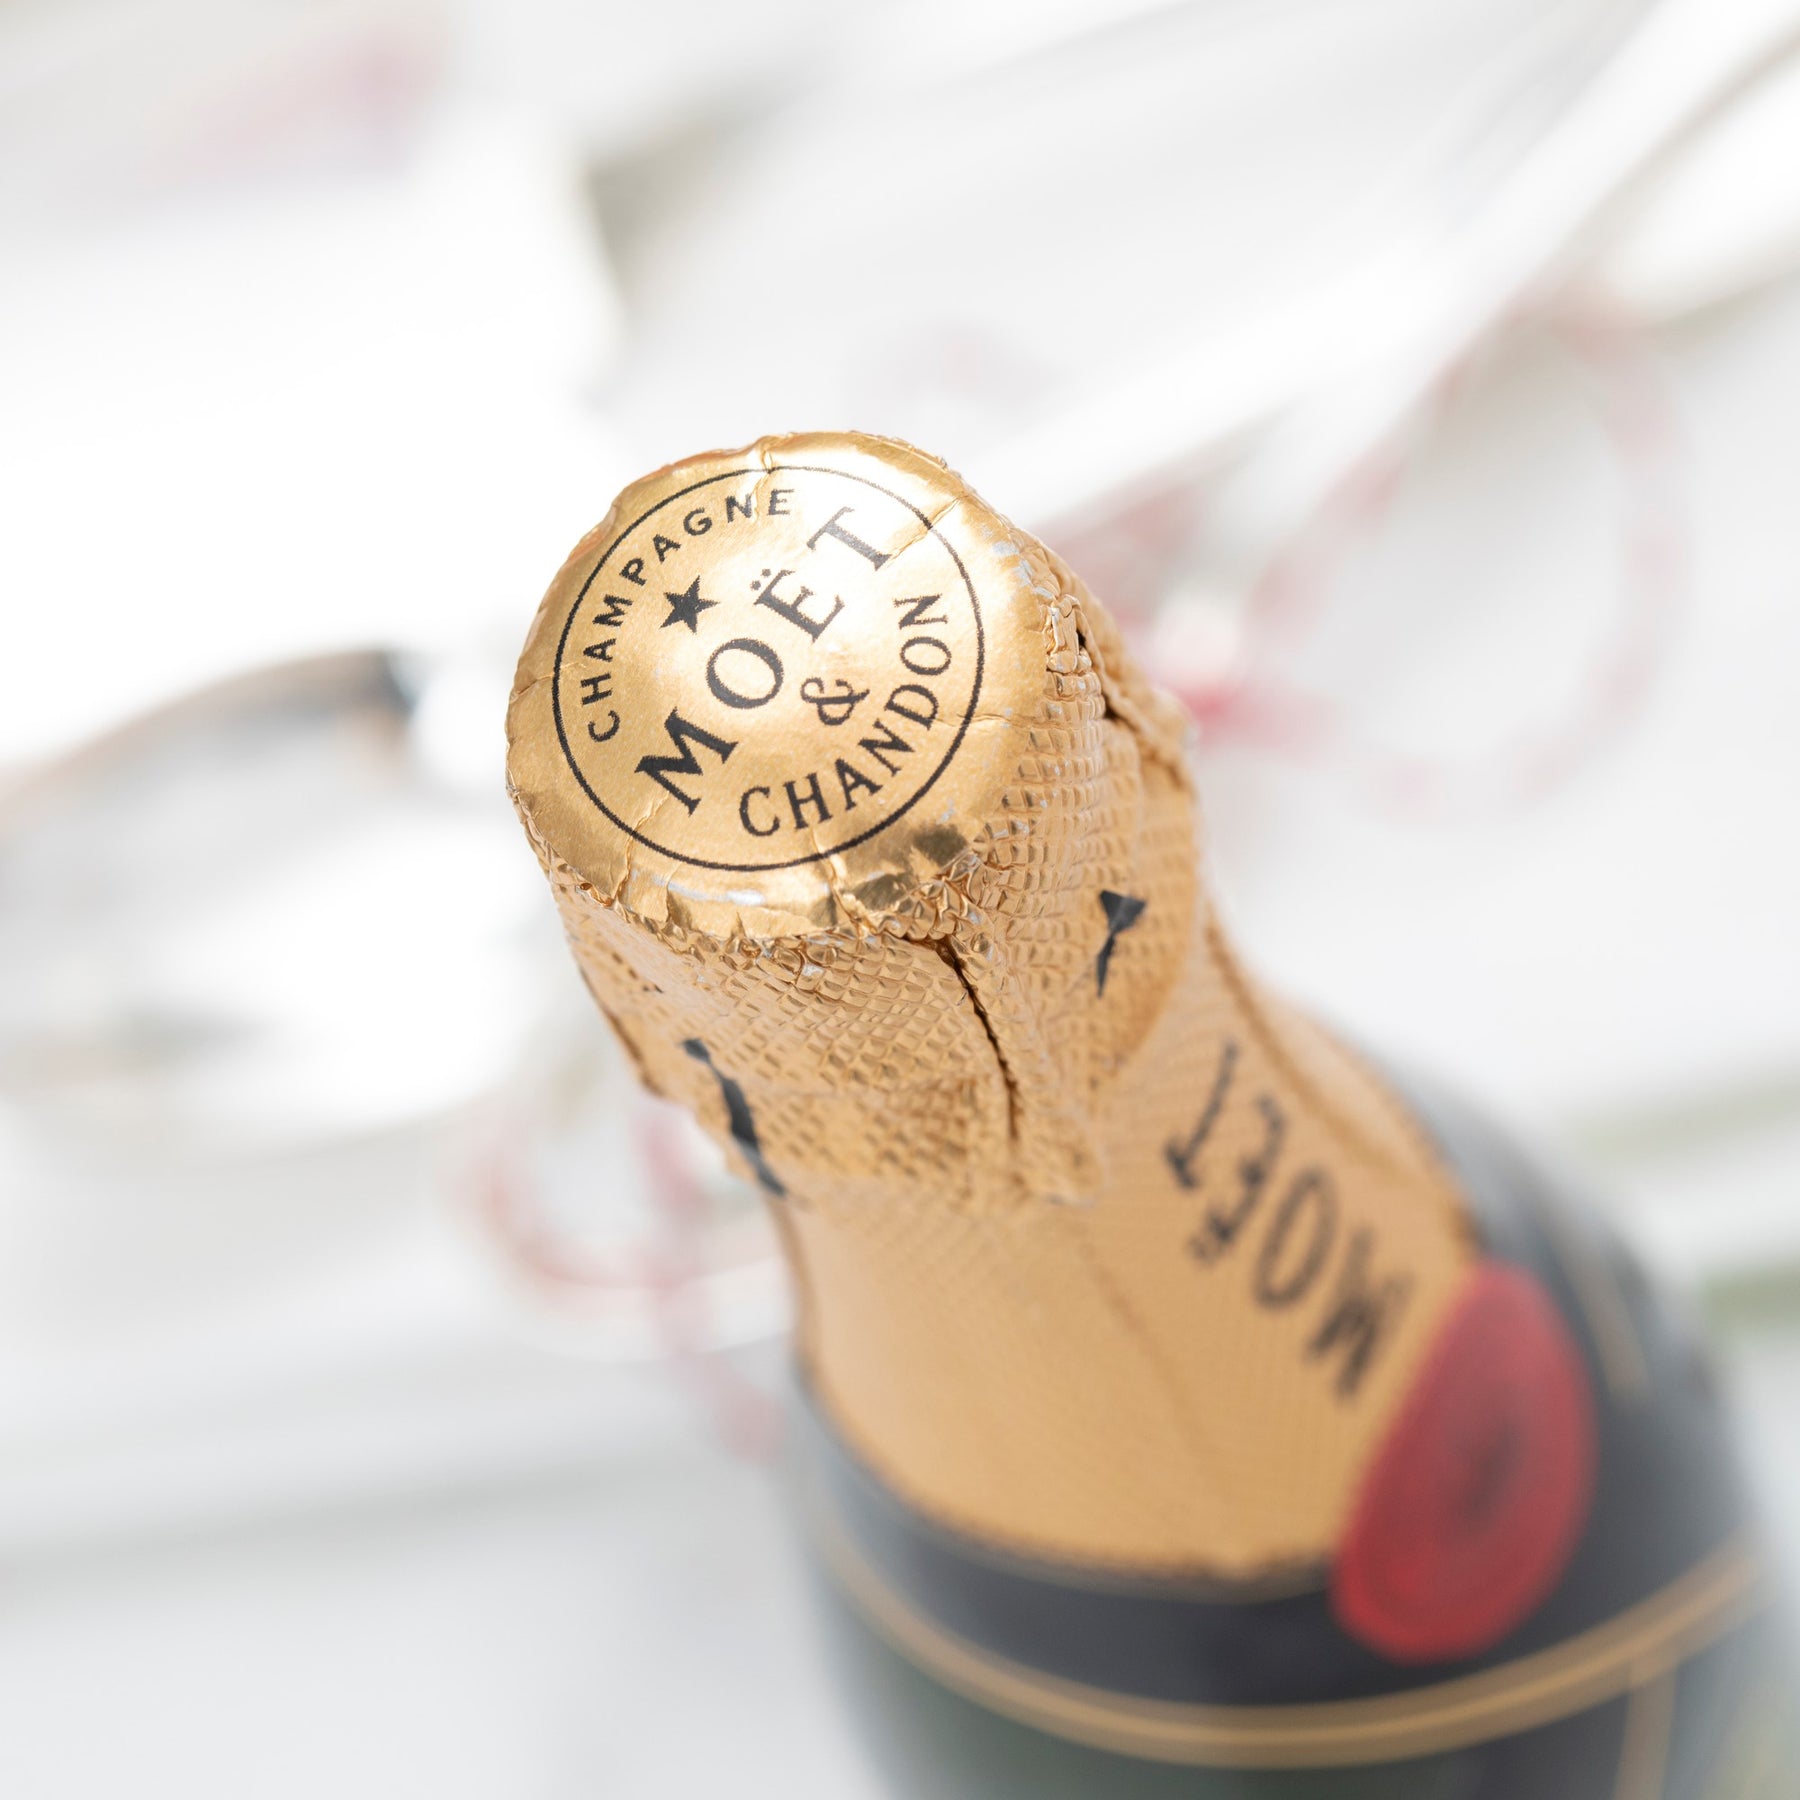 Moët Chandon Imperial Champagne Brut - Mini Edition 200ml